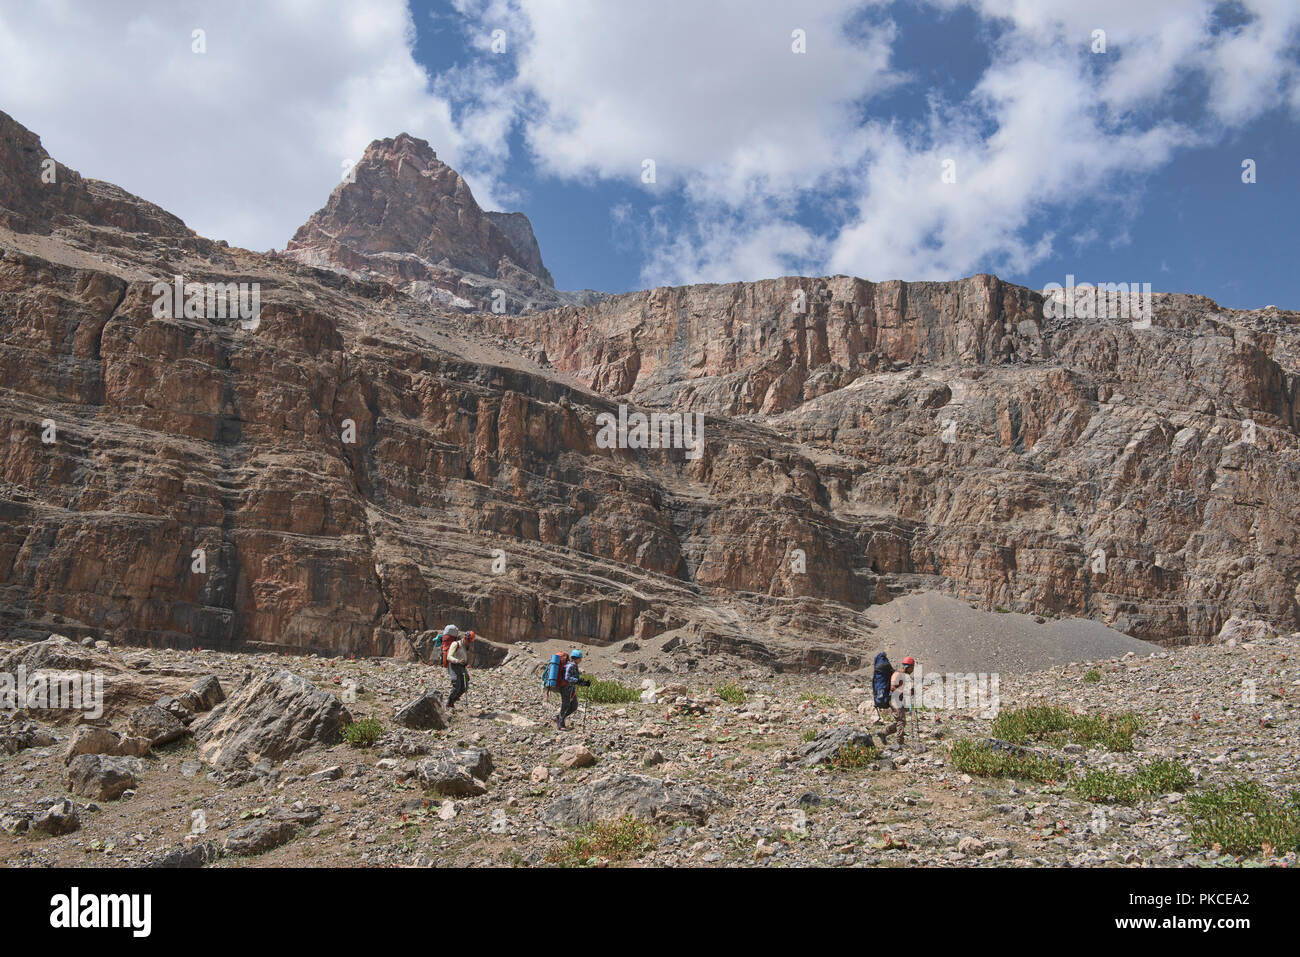 Climbers in the Fann Mountains, Tajikistan. Stock Photo